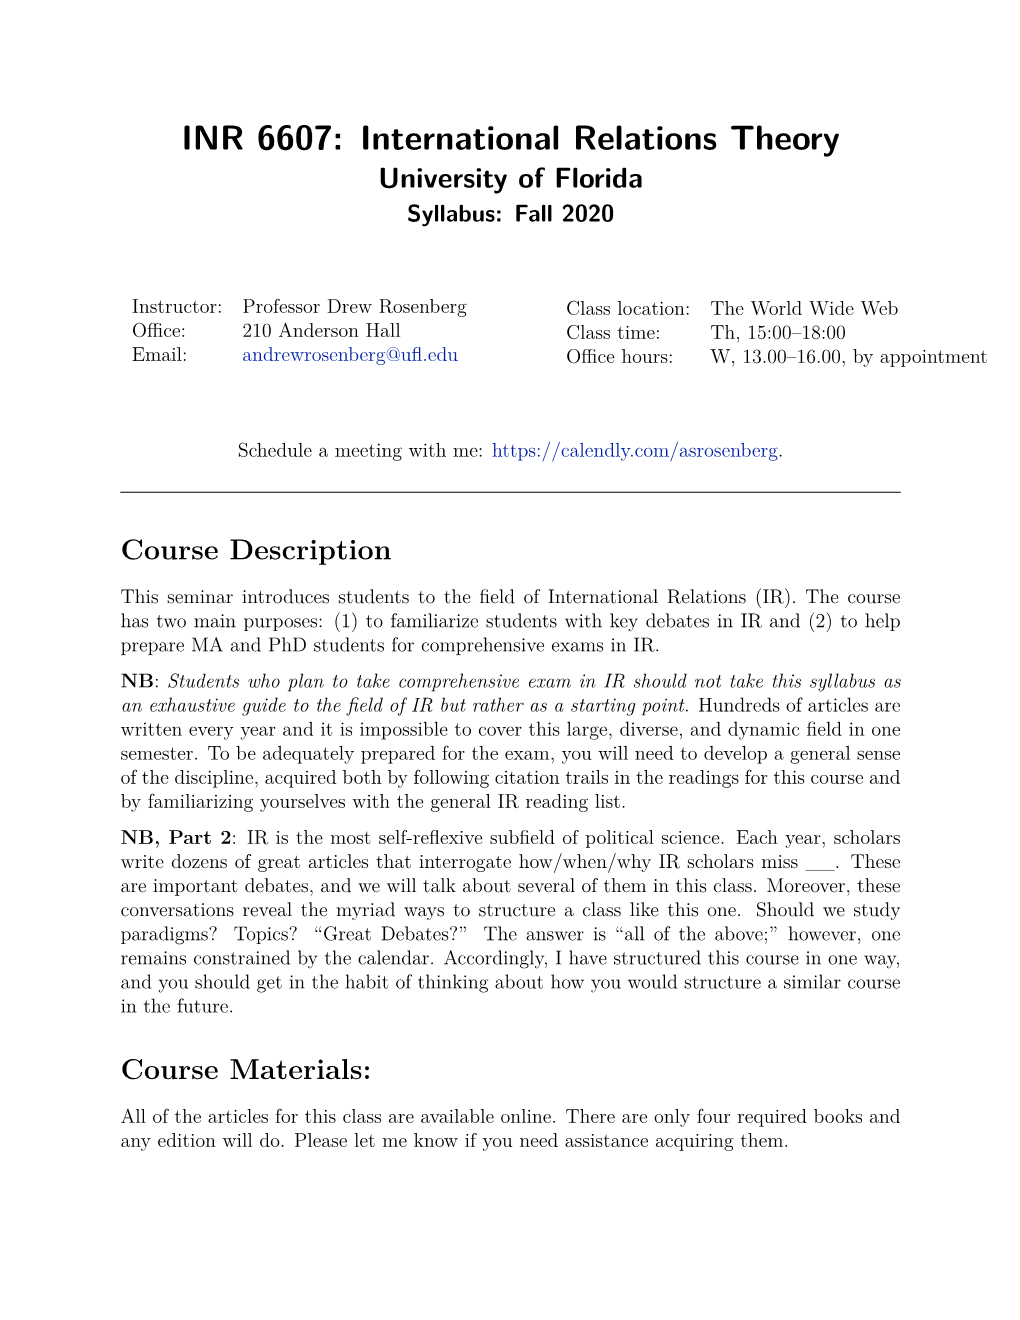 INR 6607: International Relations Theory University of Florida Syllabus: Fall 2020